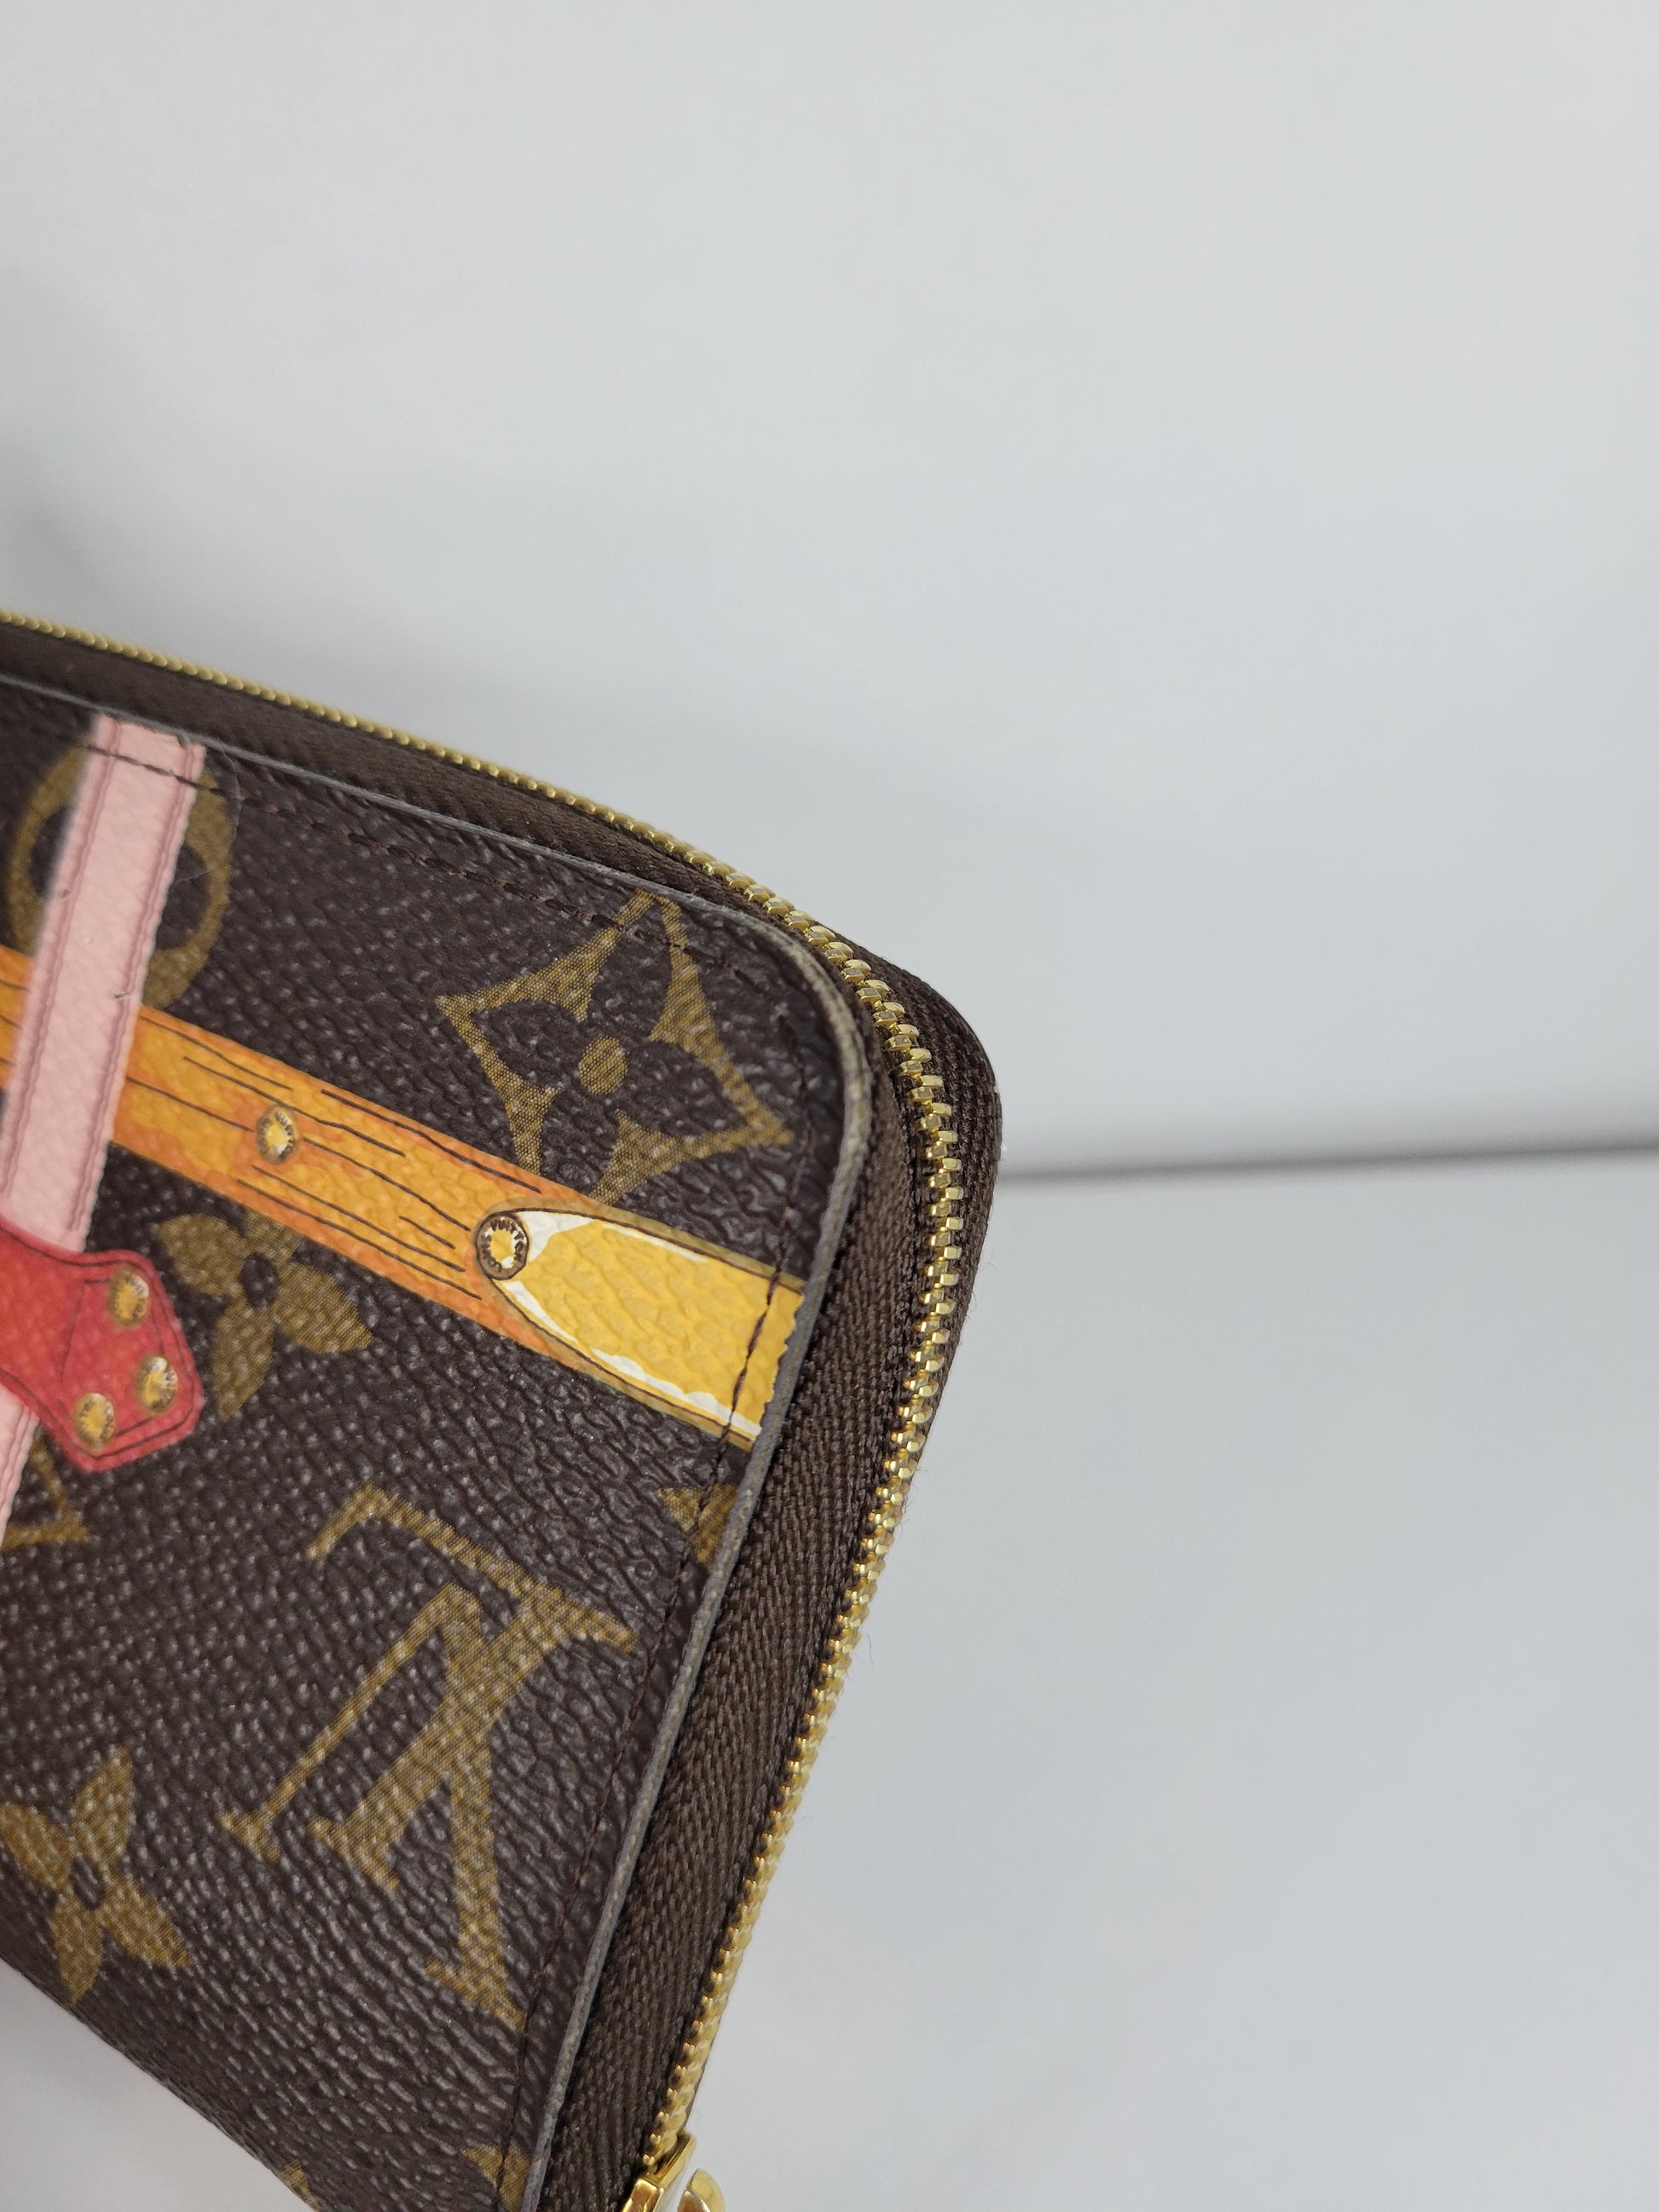 Louis Vuitton Monogram Illustre Trunks Zippy Zip Around Long Wallet Clutch  LTD